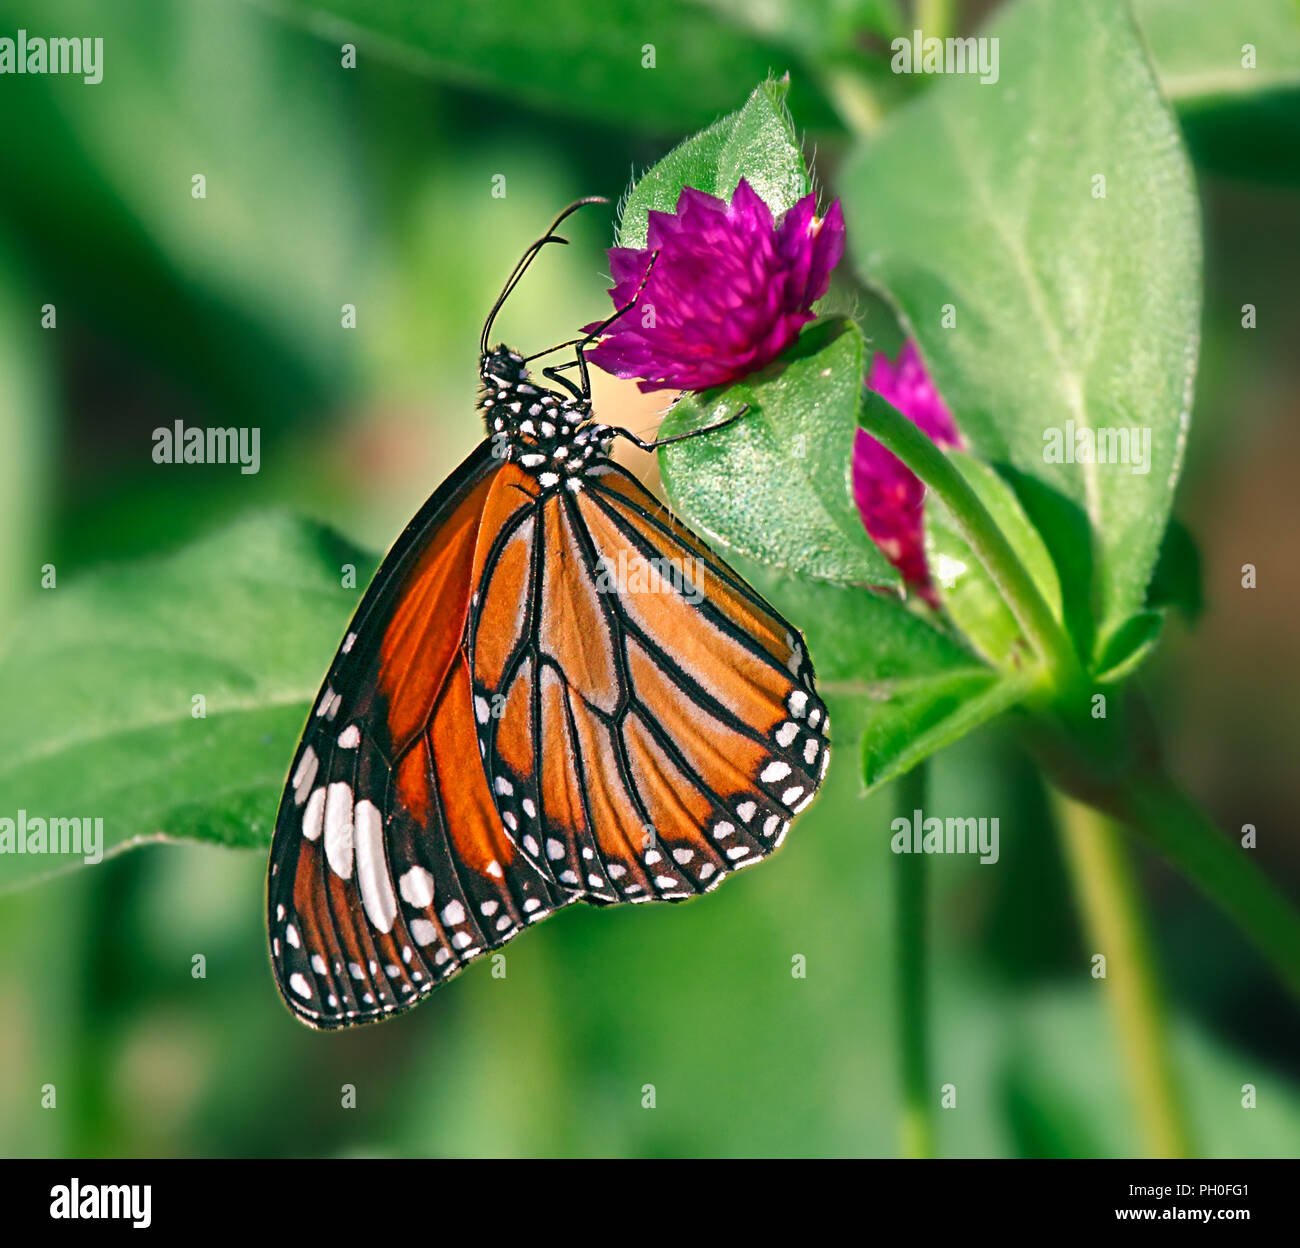 Danaus genutia or oriental striped tiger orange butterfly on a purple flower of gomphrena globose or common globe amaranth. Stock Photo